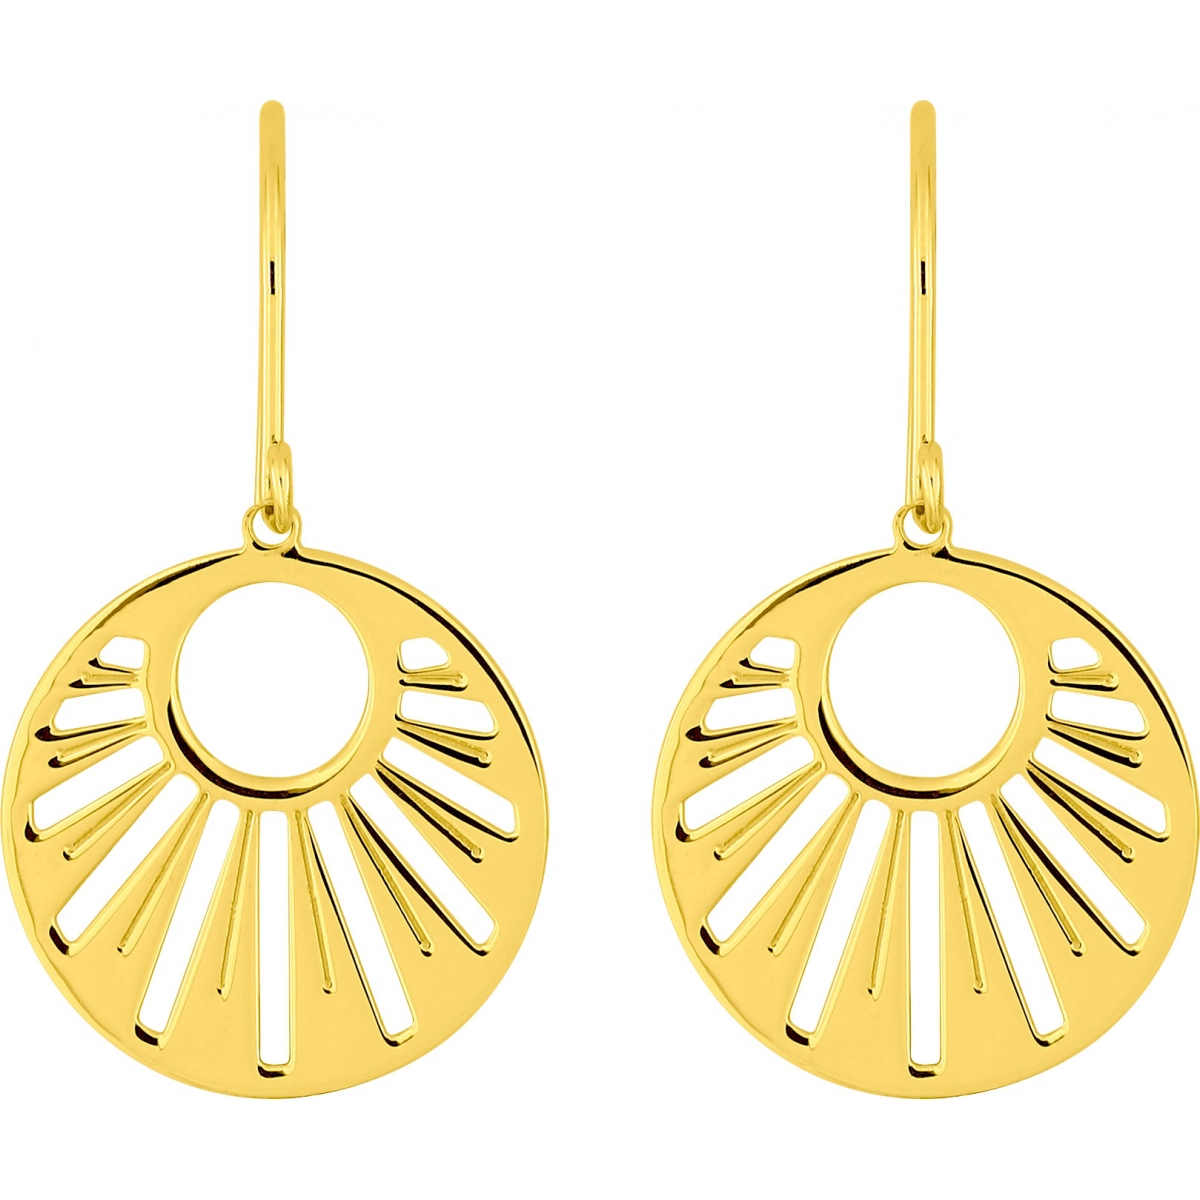 Earrings pair gold plated Brass Lua Blanca  258336 